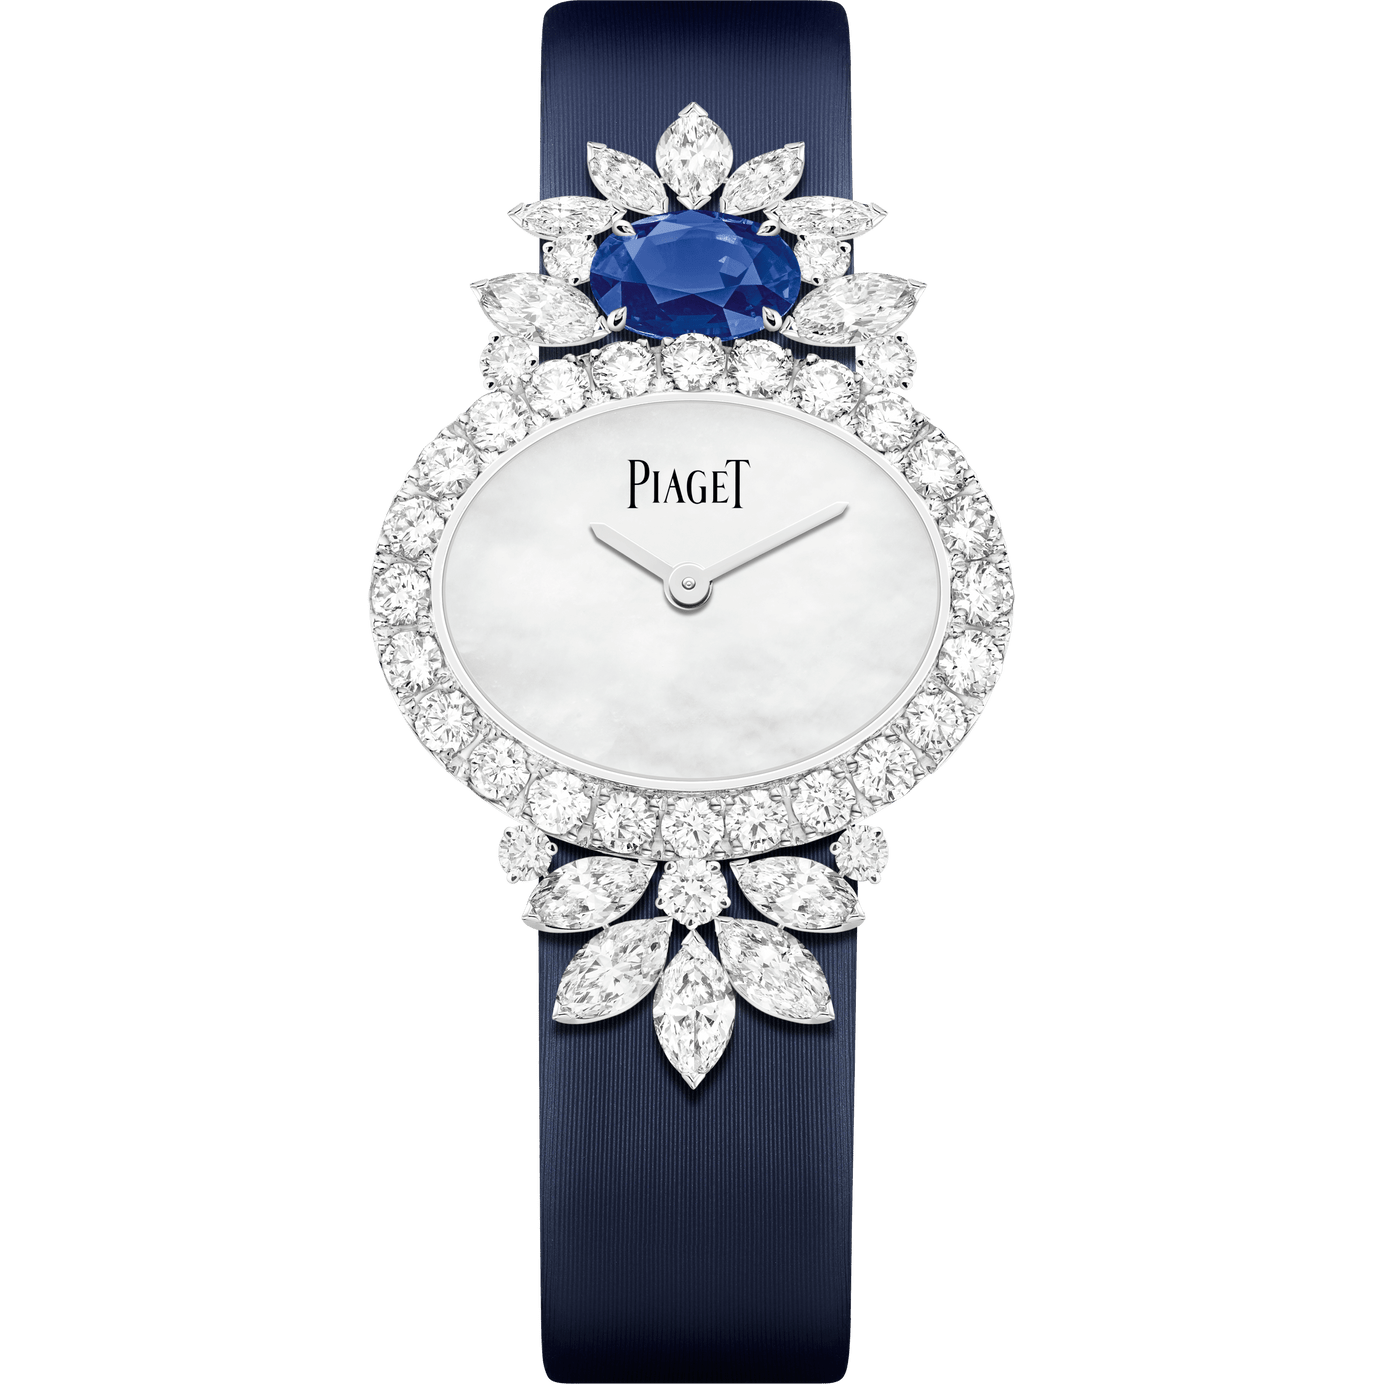 Piaget White Gold Sapphire Diamond Watch G0A45026